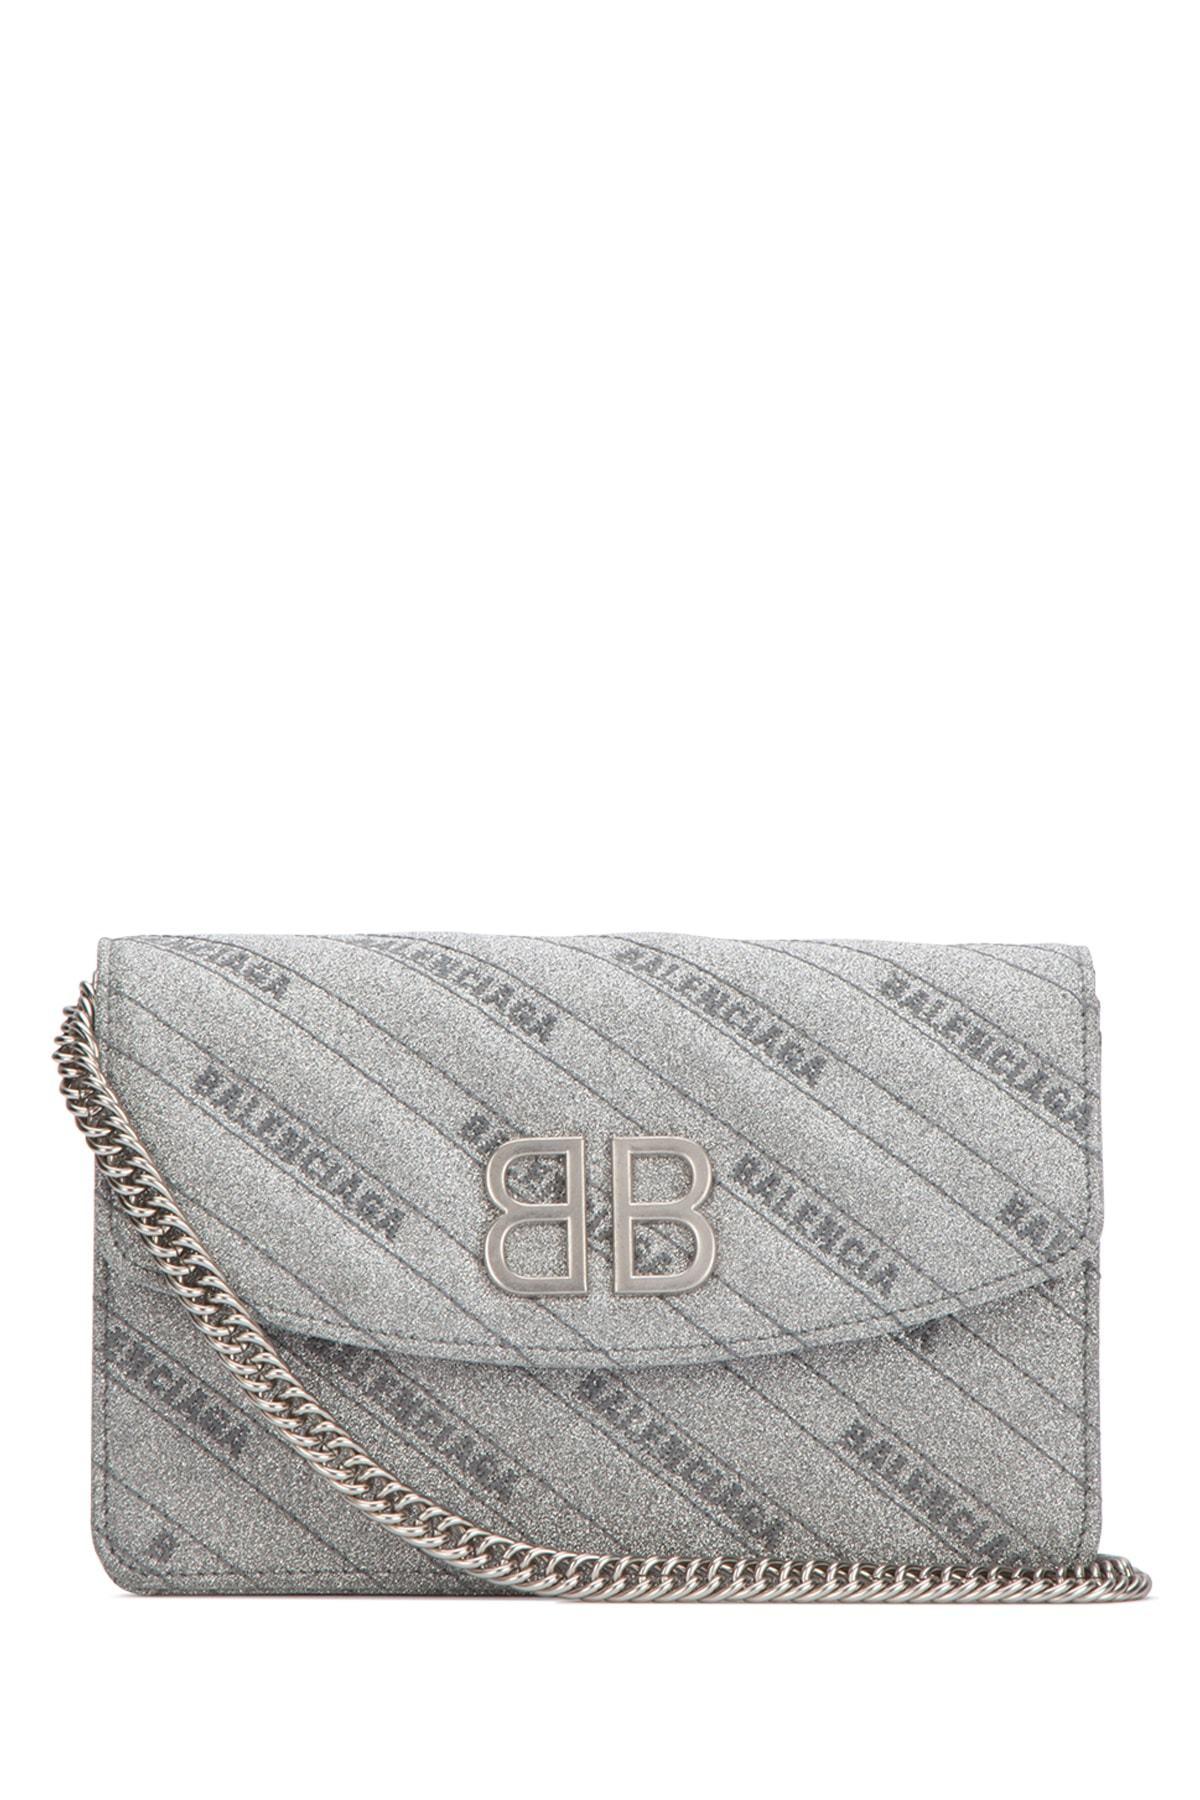 Balenciaga Bb Chain Wallet Glitter Bag in Metallic | Lyst